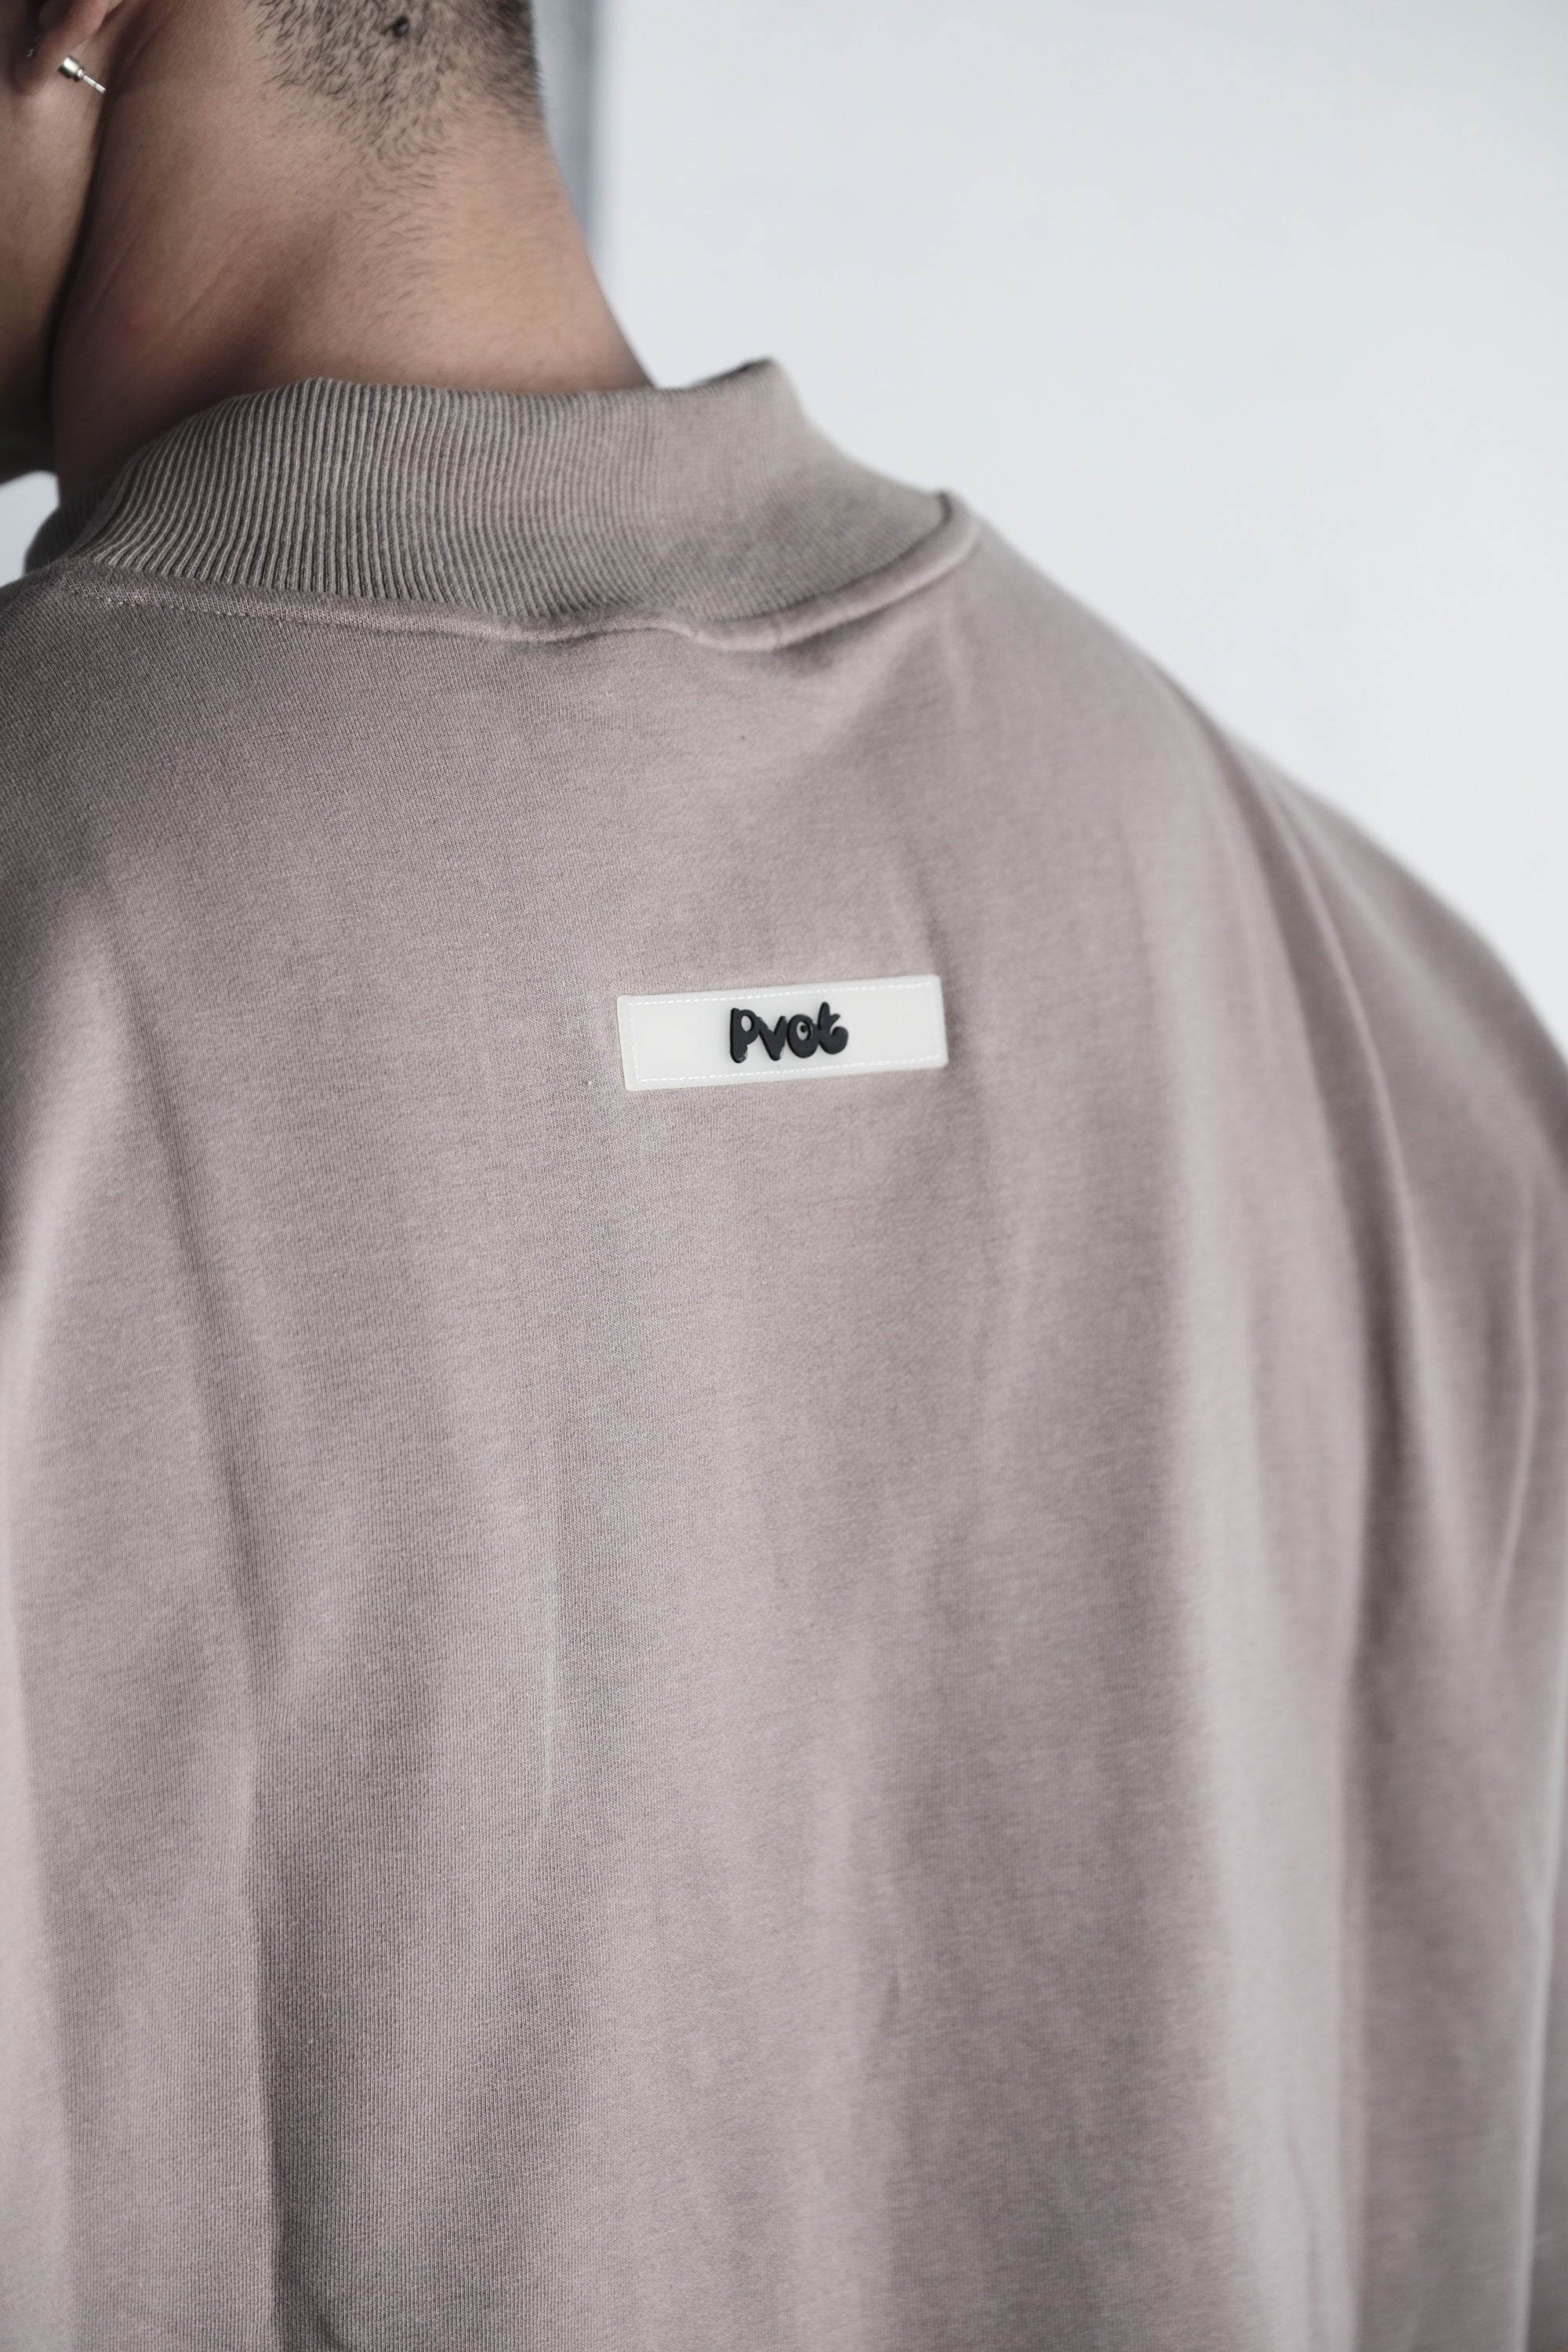 Pvot Mock Neck T-Shirts (Tan)